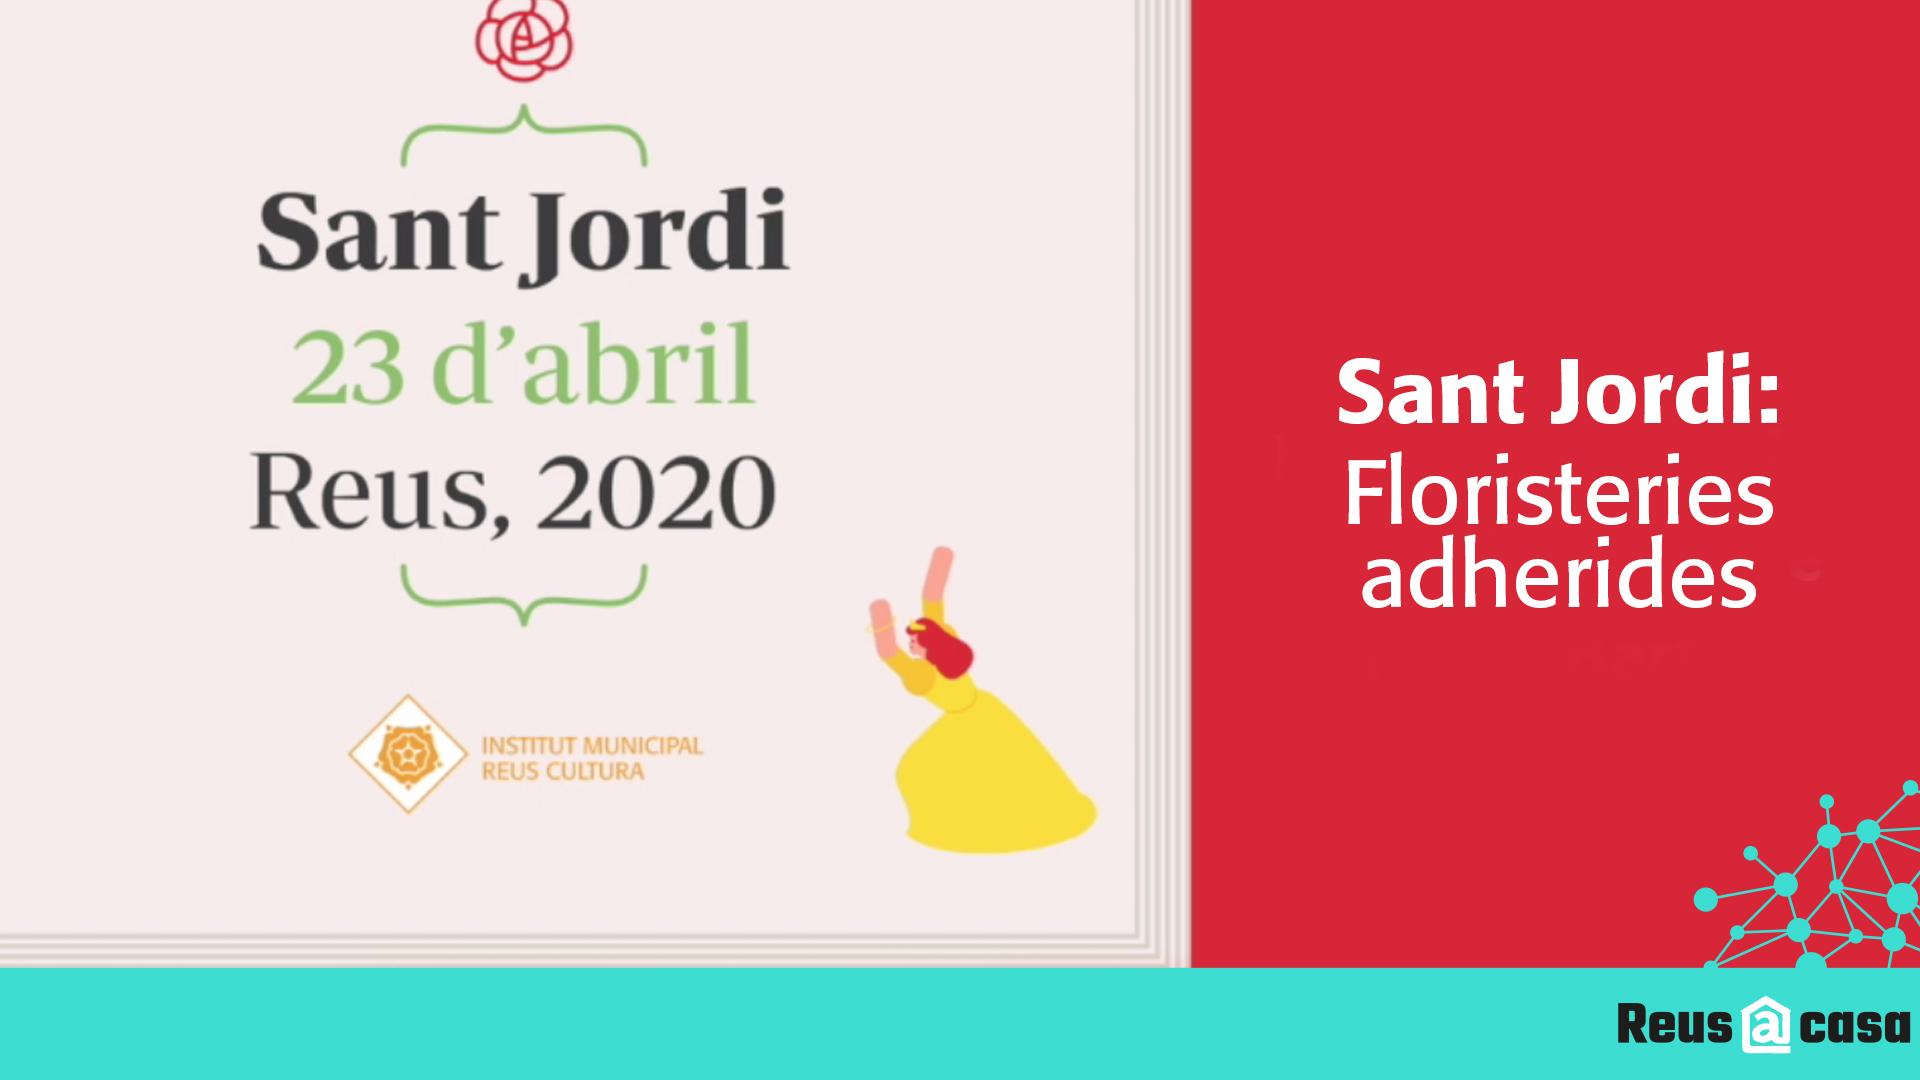 Sant Jordi: Floristeries adherides